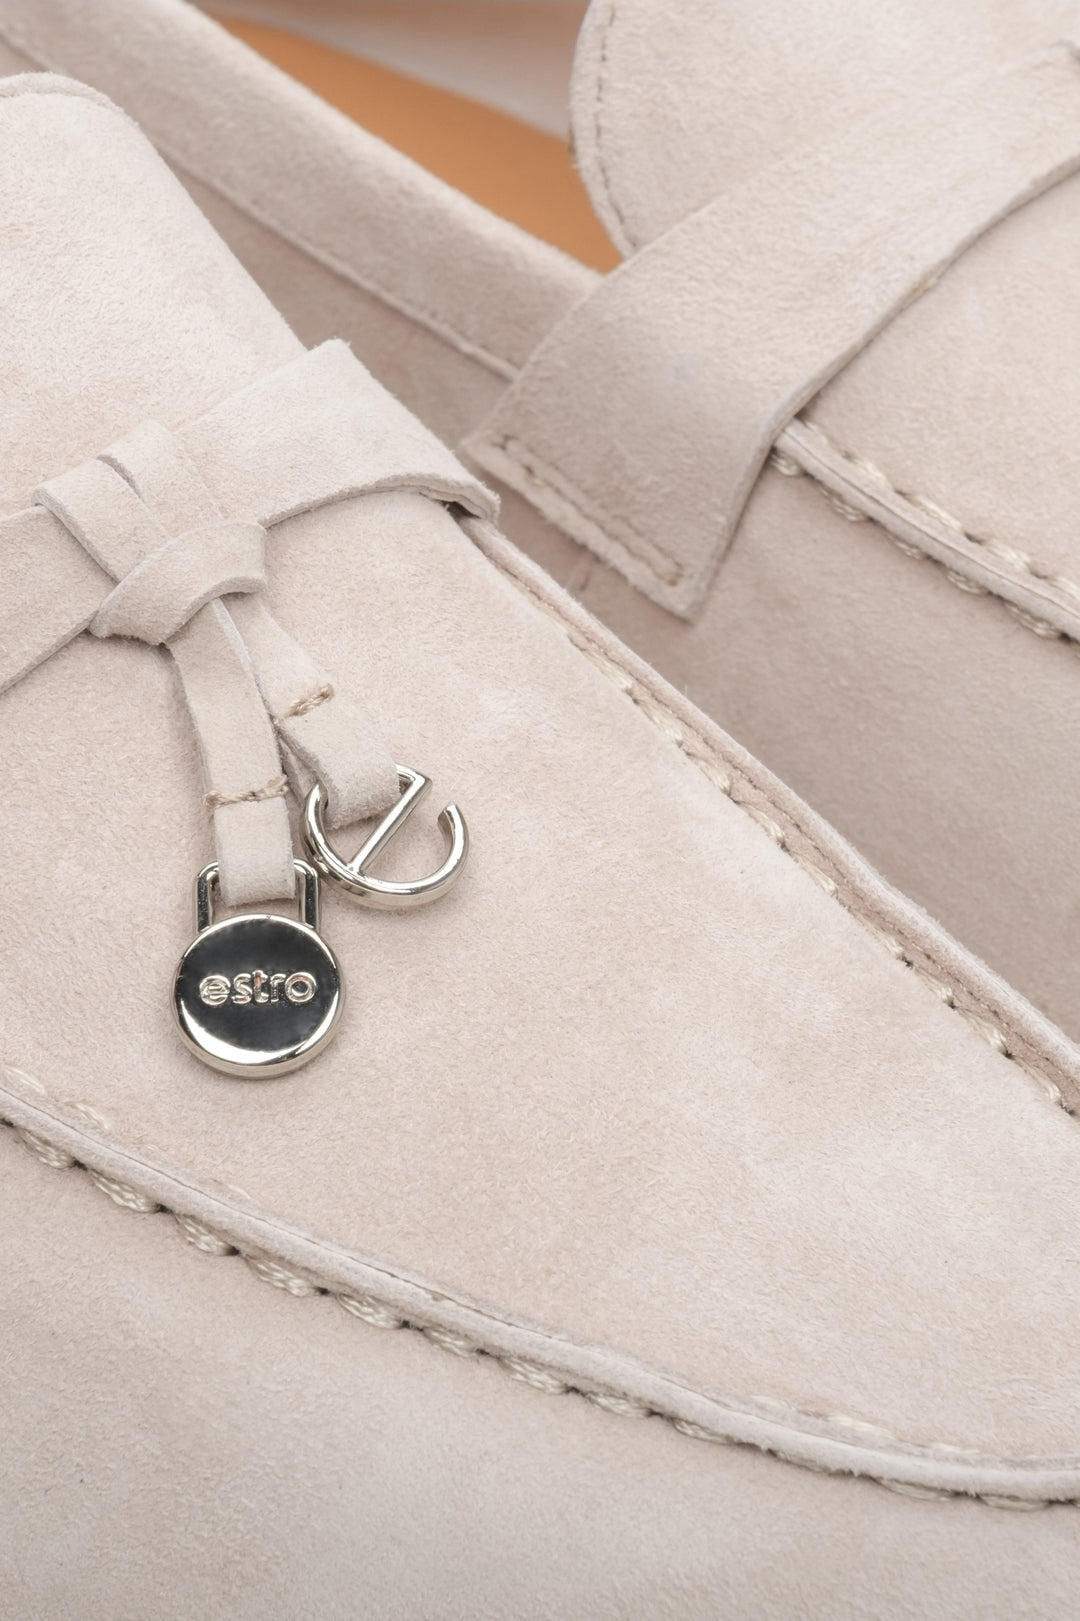 Light beige comfy and elegant women's velour loafers - close-up on details.